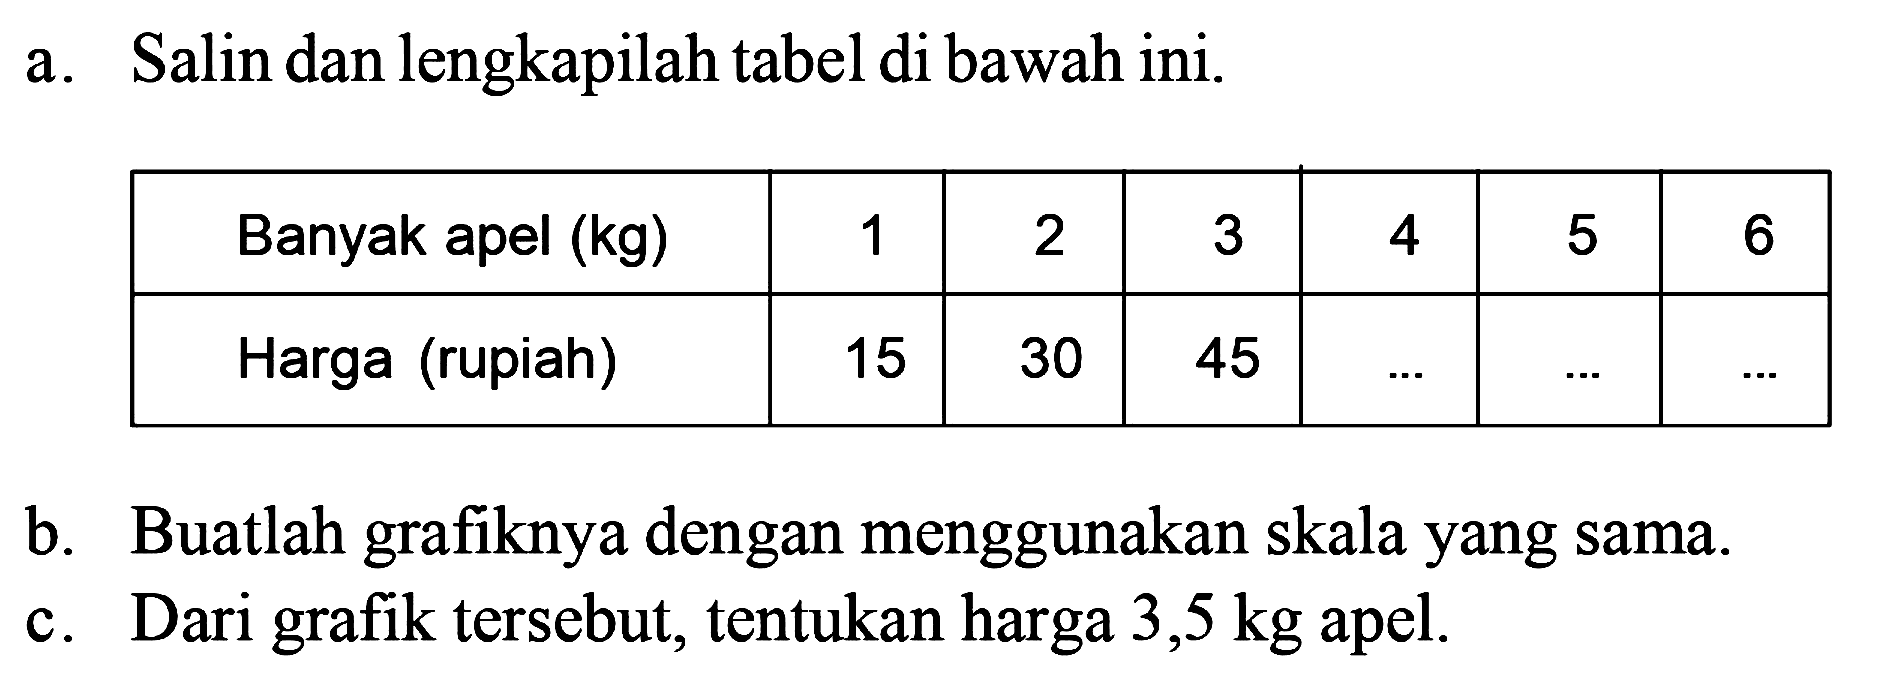 a. Salin dan lengkapilah tabel di bawah ini.    Banyak apel  (kg)   1  2  3  4  5  6     Harga (rupiah)  15  30  45   ...    ...    ...  b. Buatlah grafiknya dengan menggunakan skala yang sama.c. Dari grafik tersebut, tentukan harga  3,5 kg  apel.